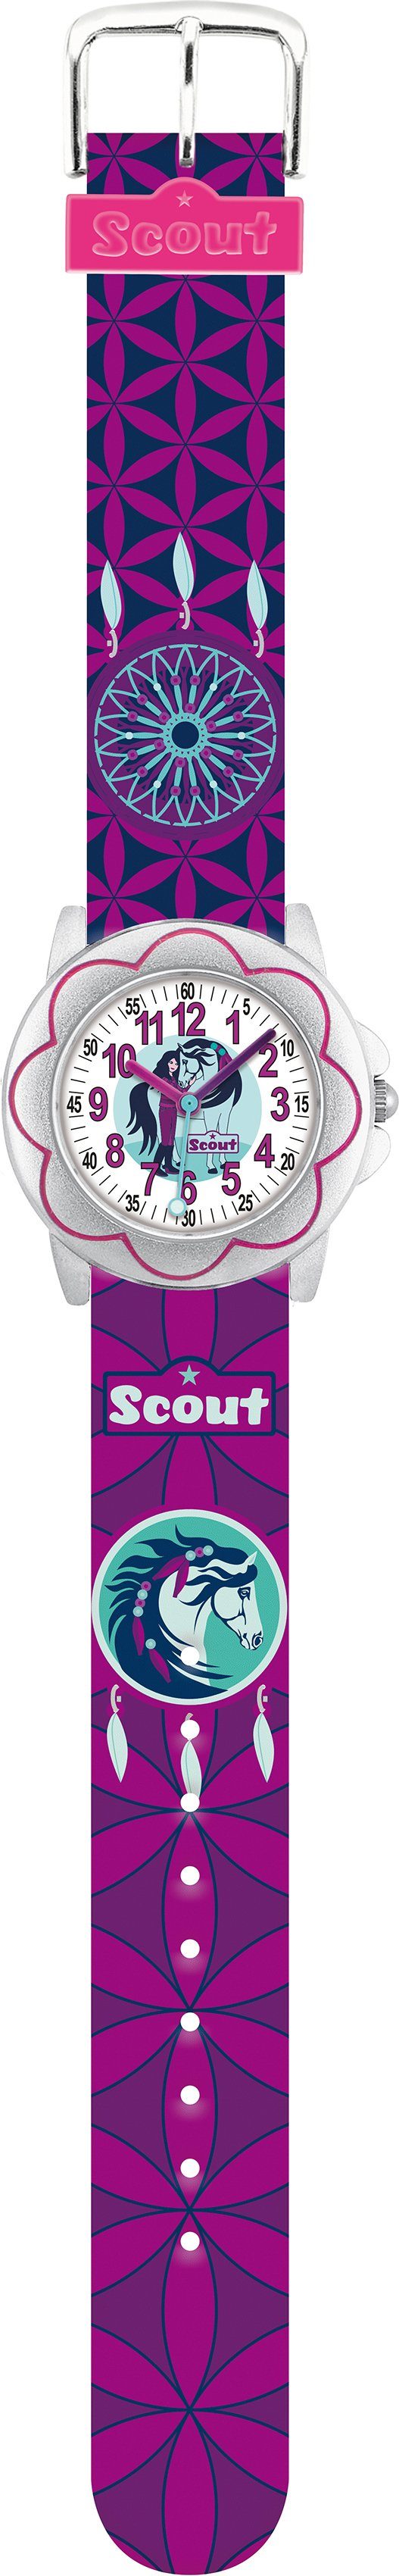 Scout Quarzuhr Star Kids, 280393034, ideal auch als Geschenk, Armband:  Kunstlederarmband mit Motiven der Scout-Serie, ca. 16 mm breit